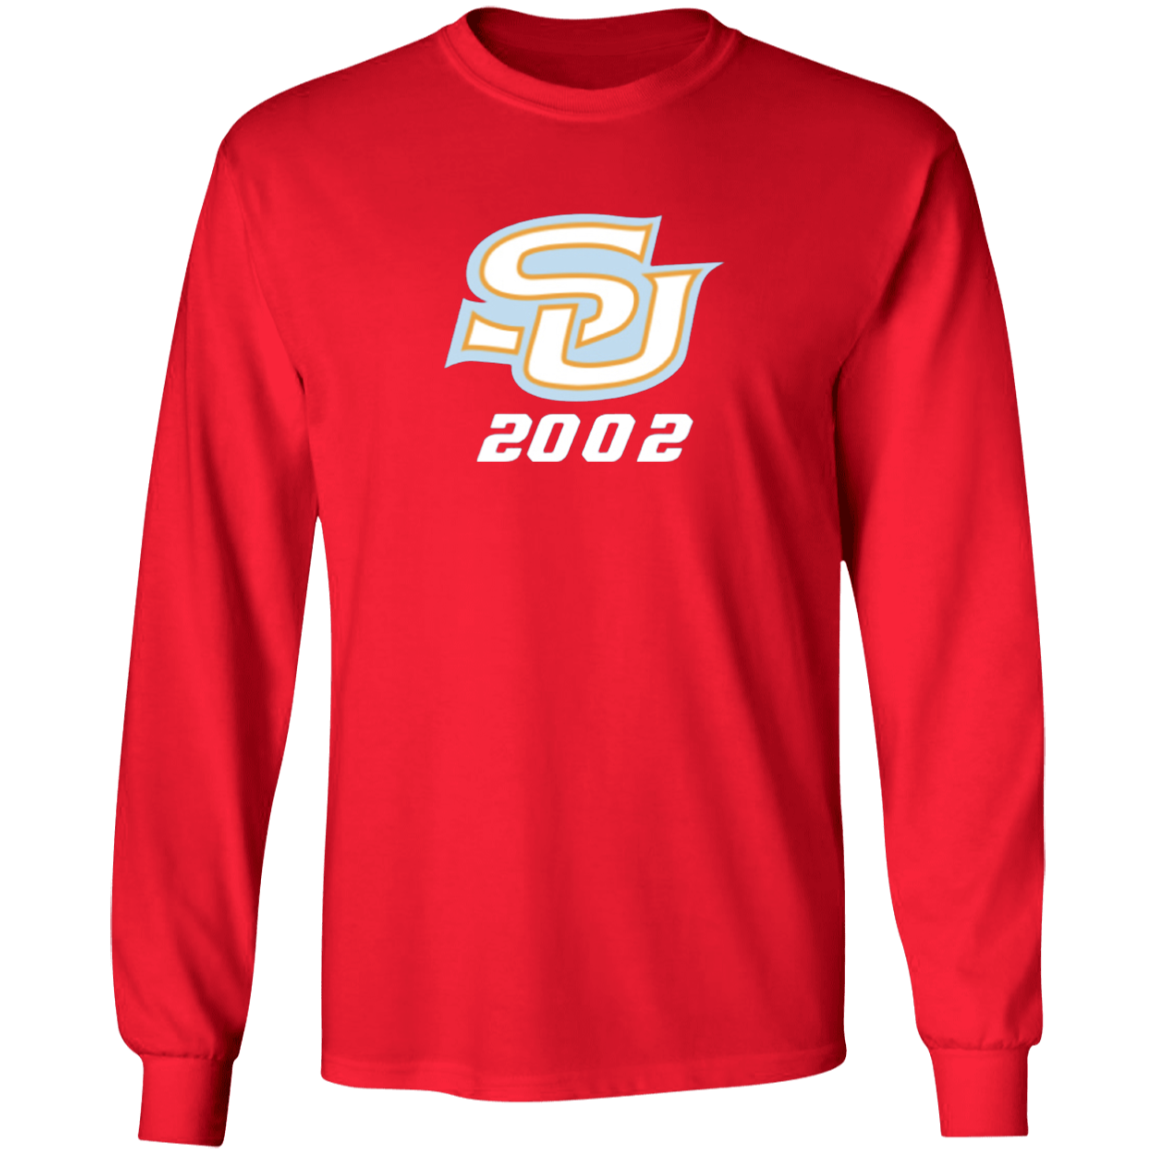 SU c/o 2002 G240 LS Ultra Cotton T-Shirt